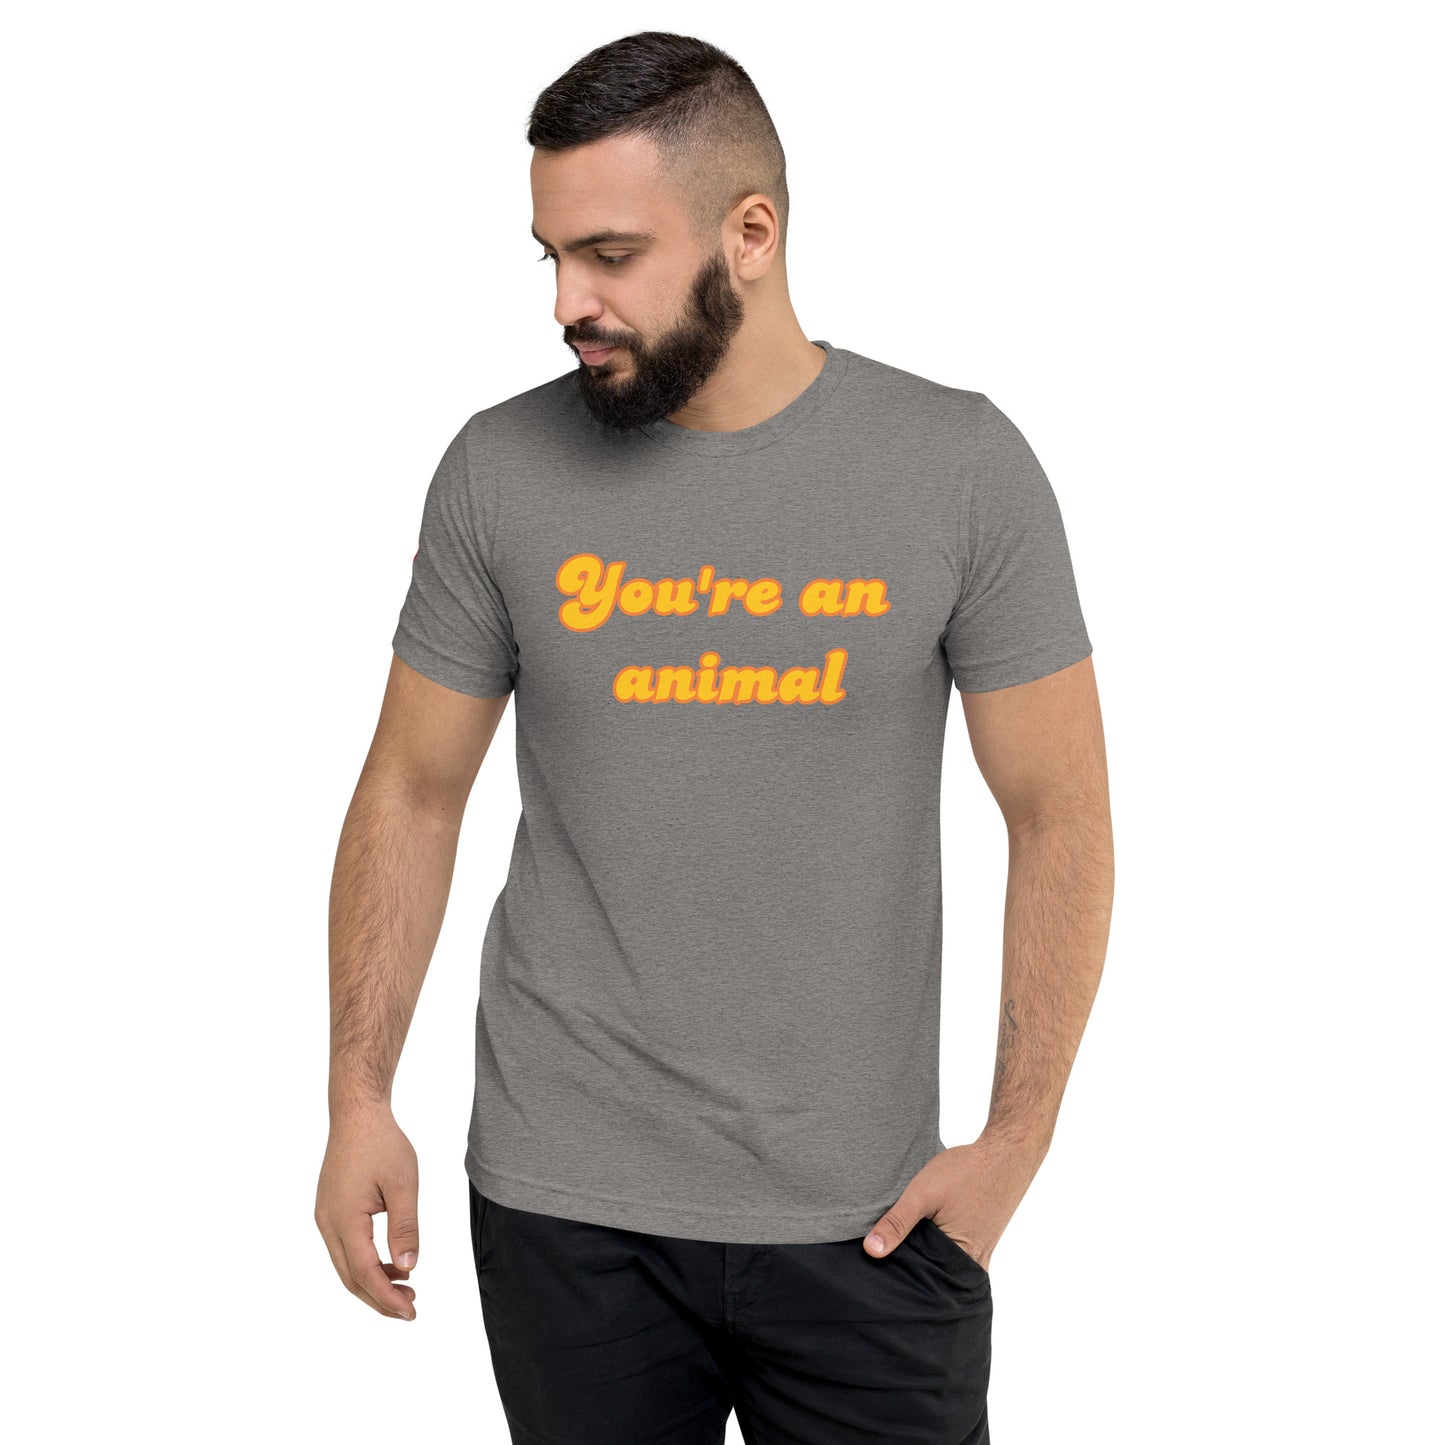 You're an animal - short sleeve t-shirt